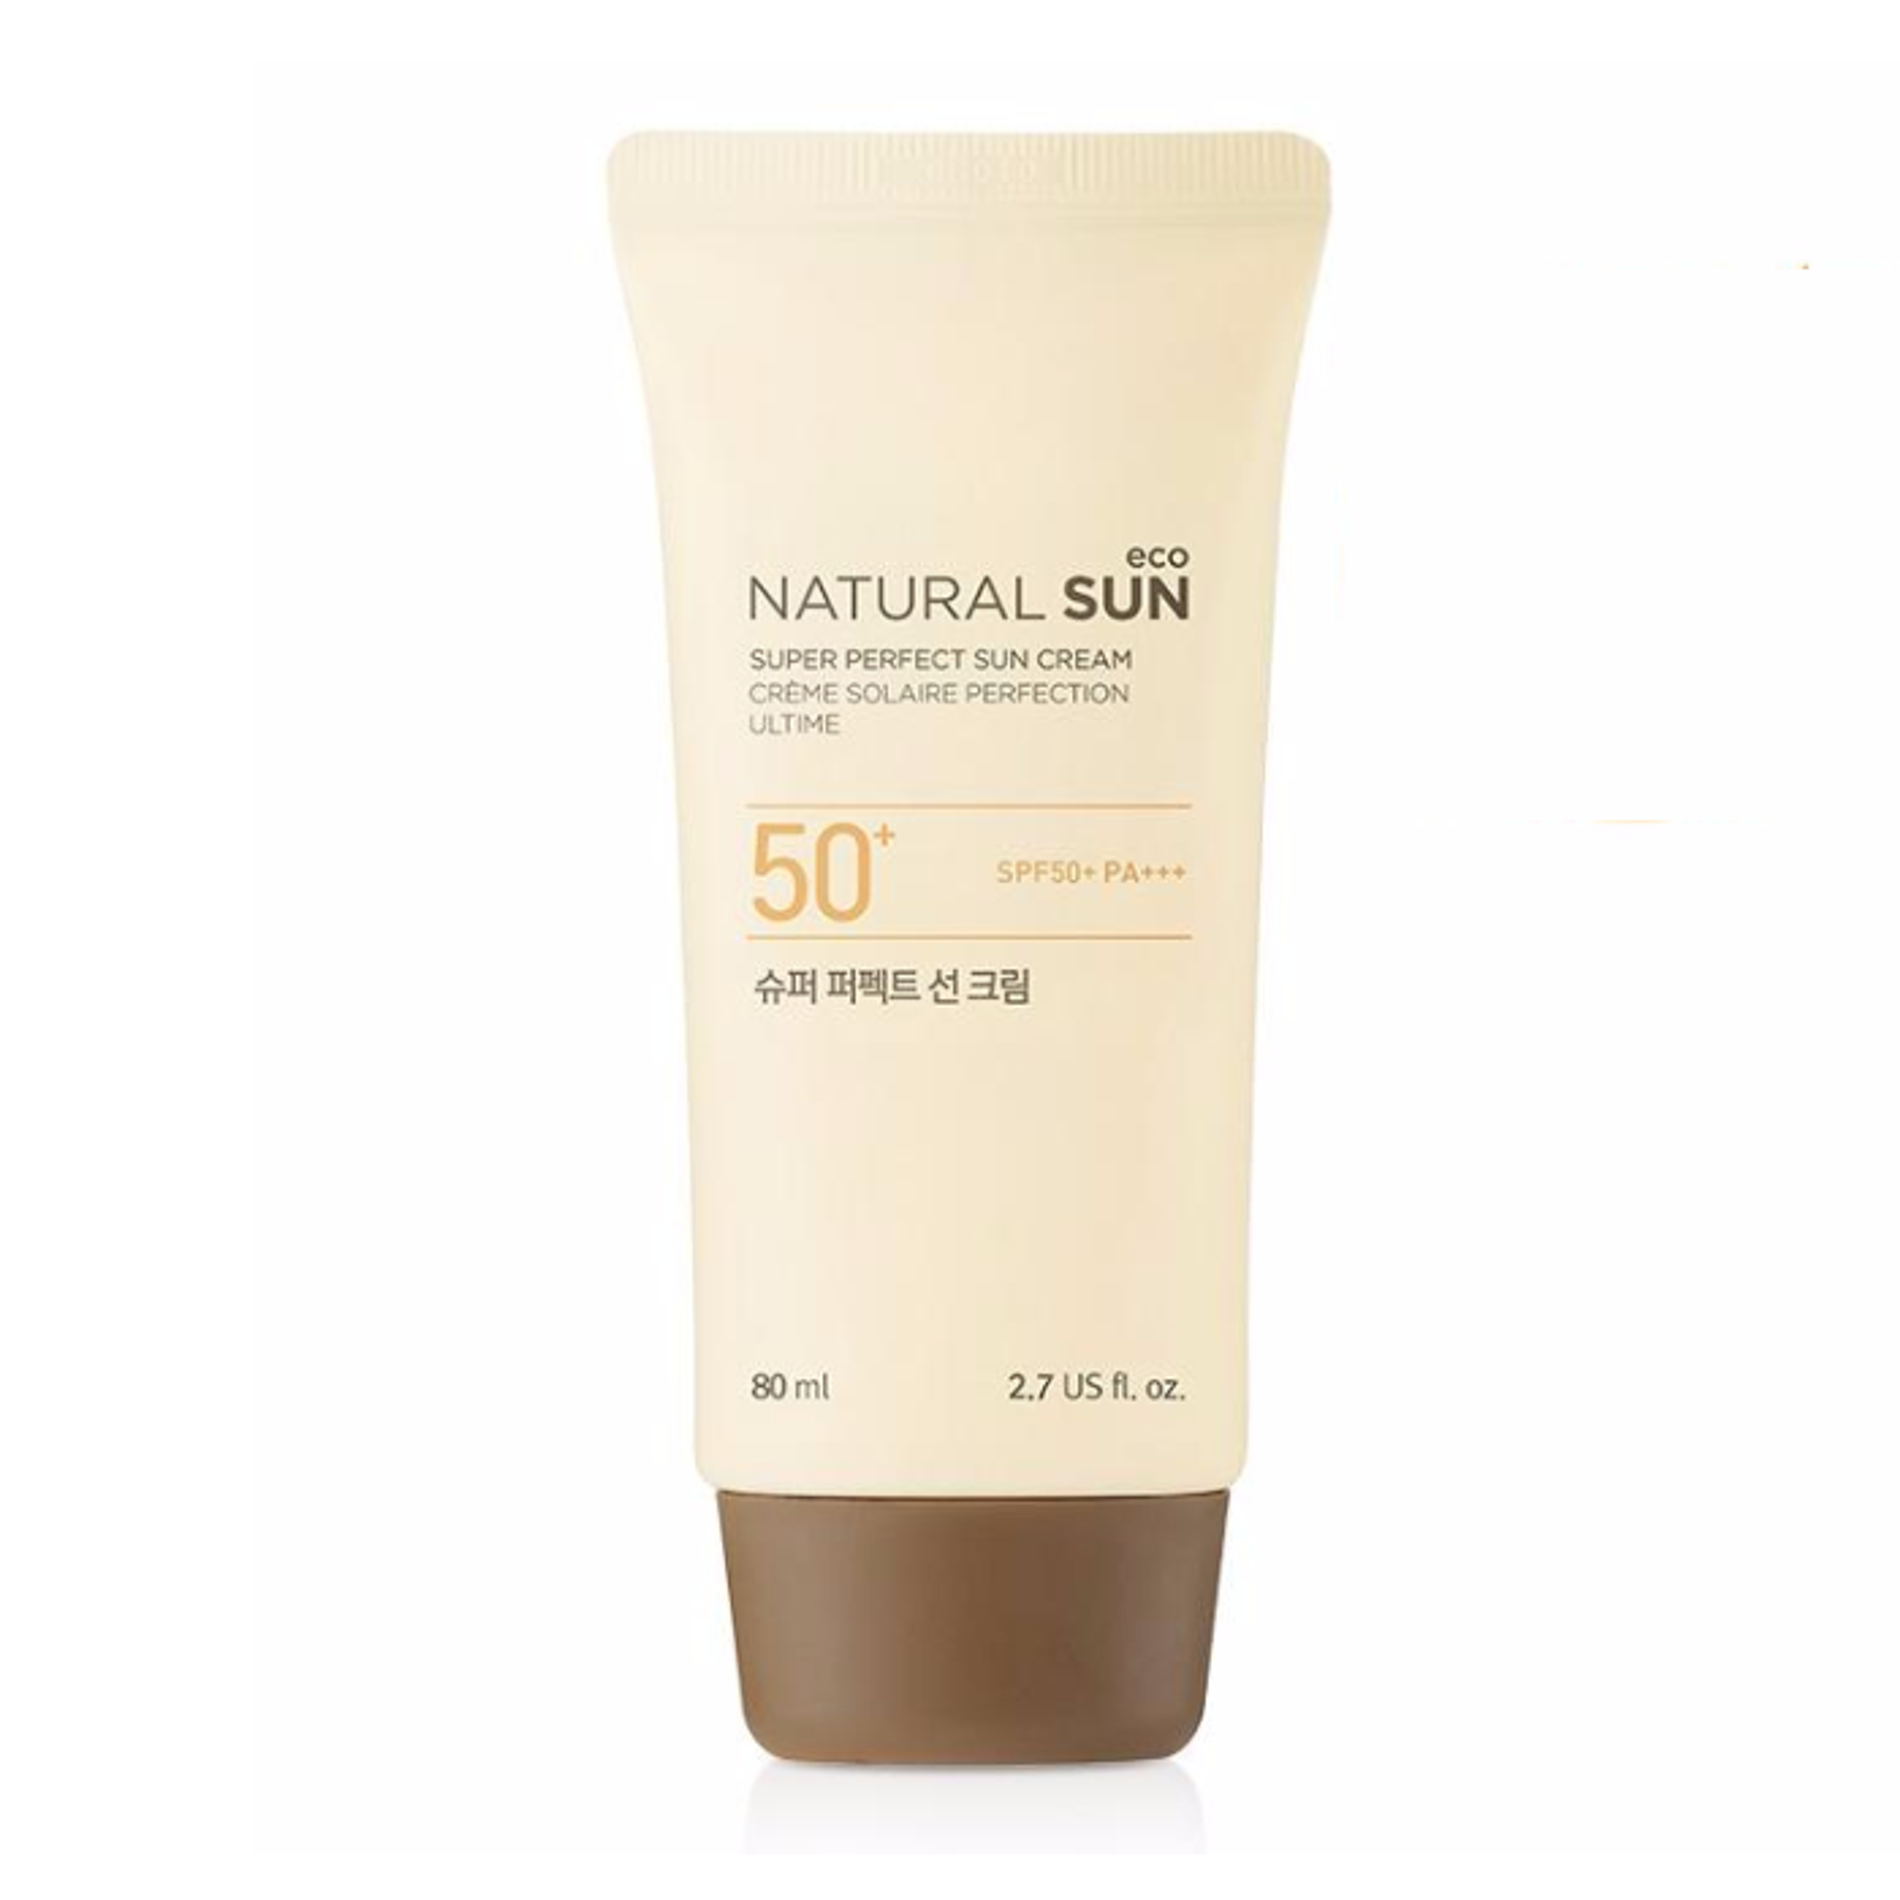 kem-chong-nang-natural-sun-eco-super-perfect-sun-cream-50-pa-80ml-2